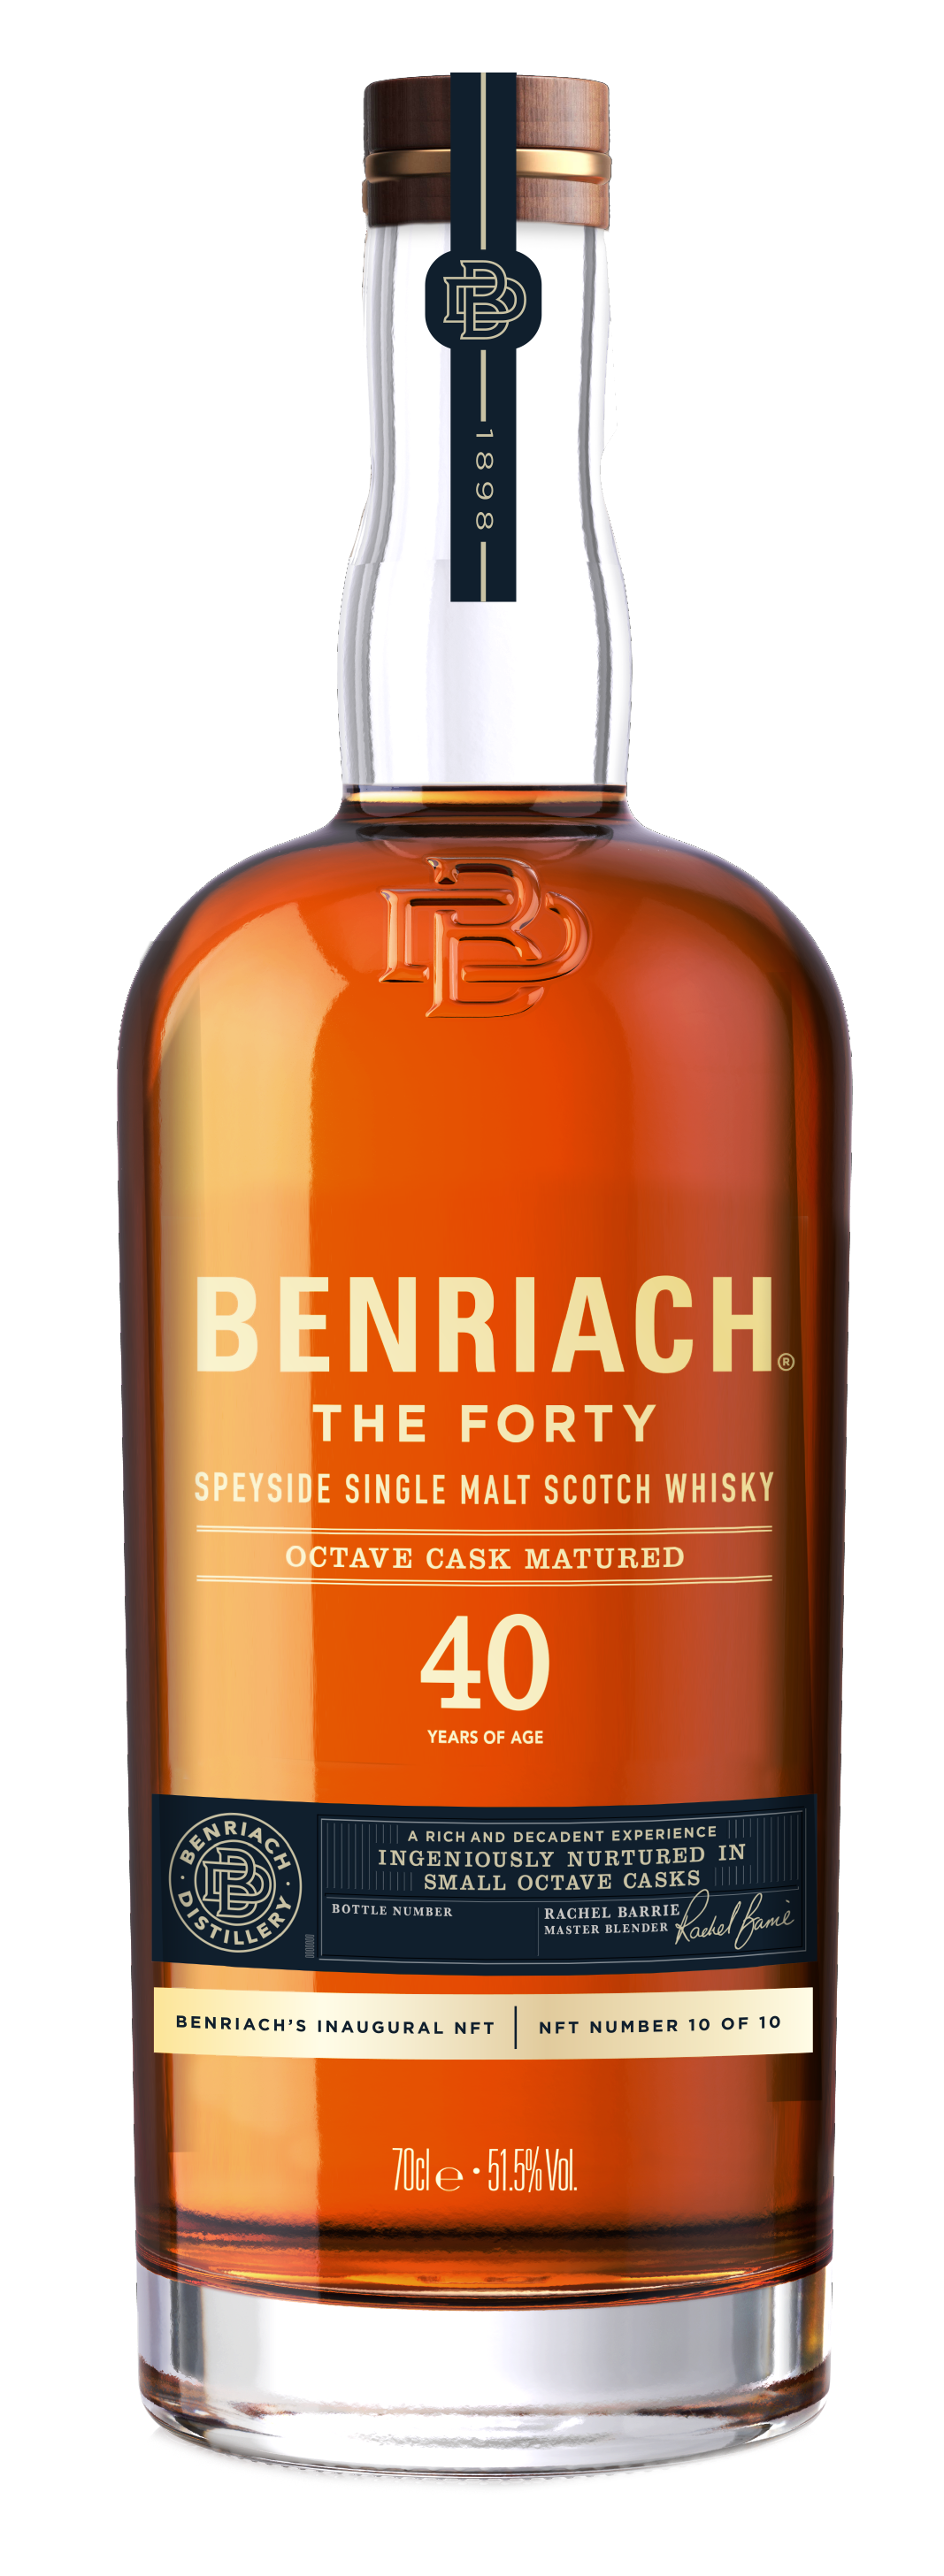 Benriach Inaugural NFT Release